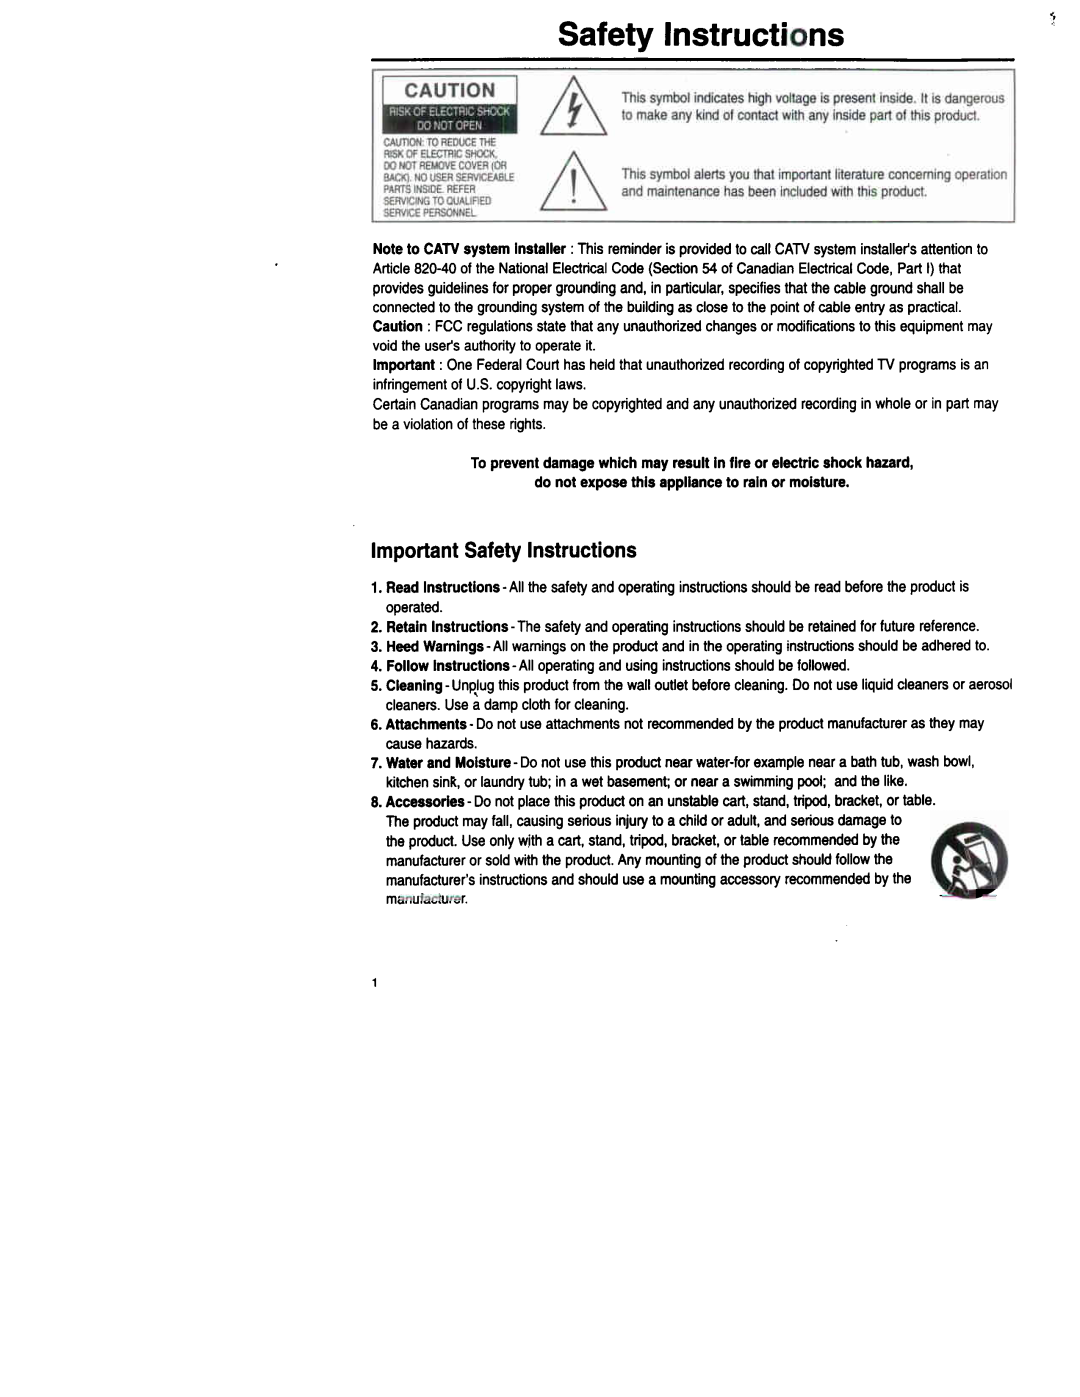 Rosen Entertainment Systems R5000 manual 